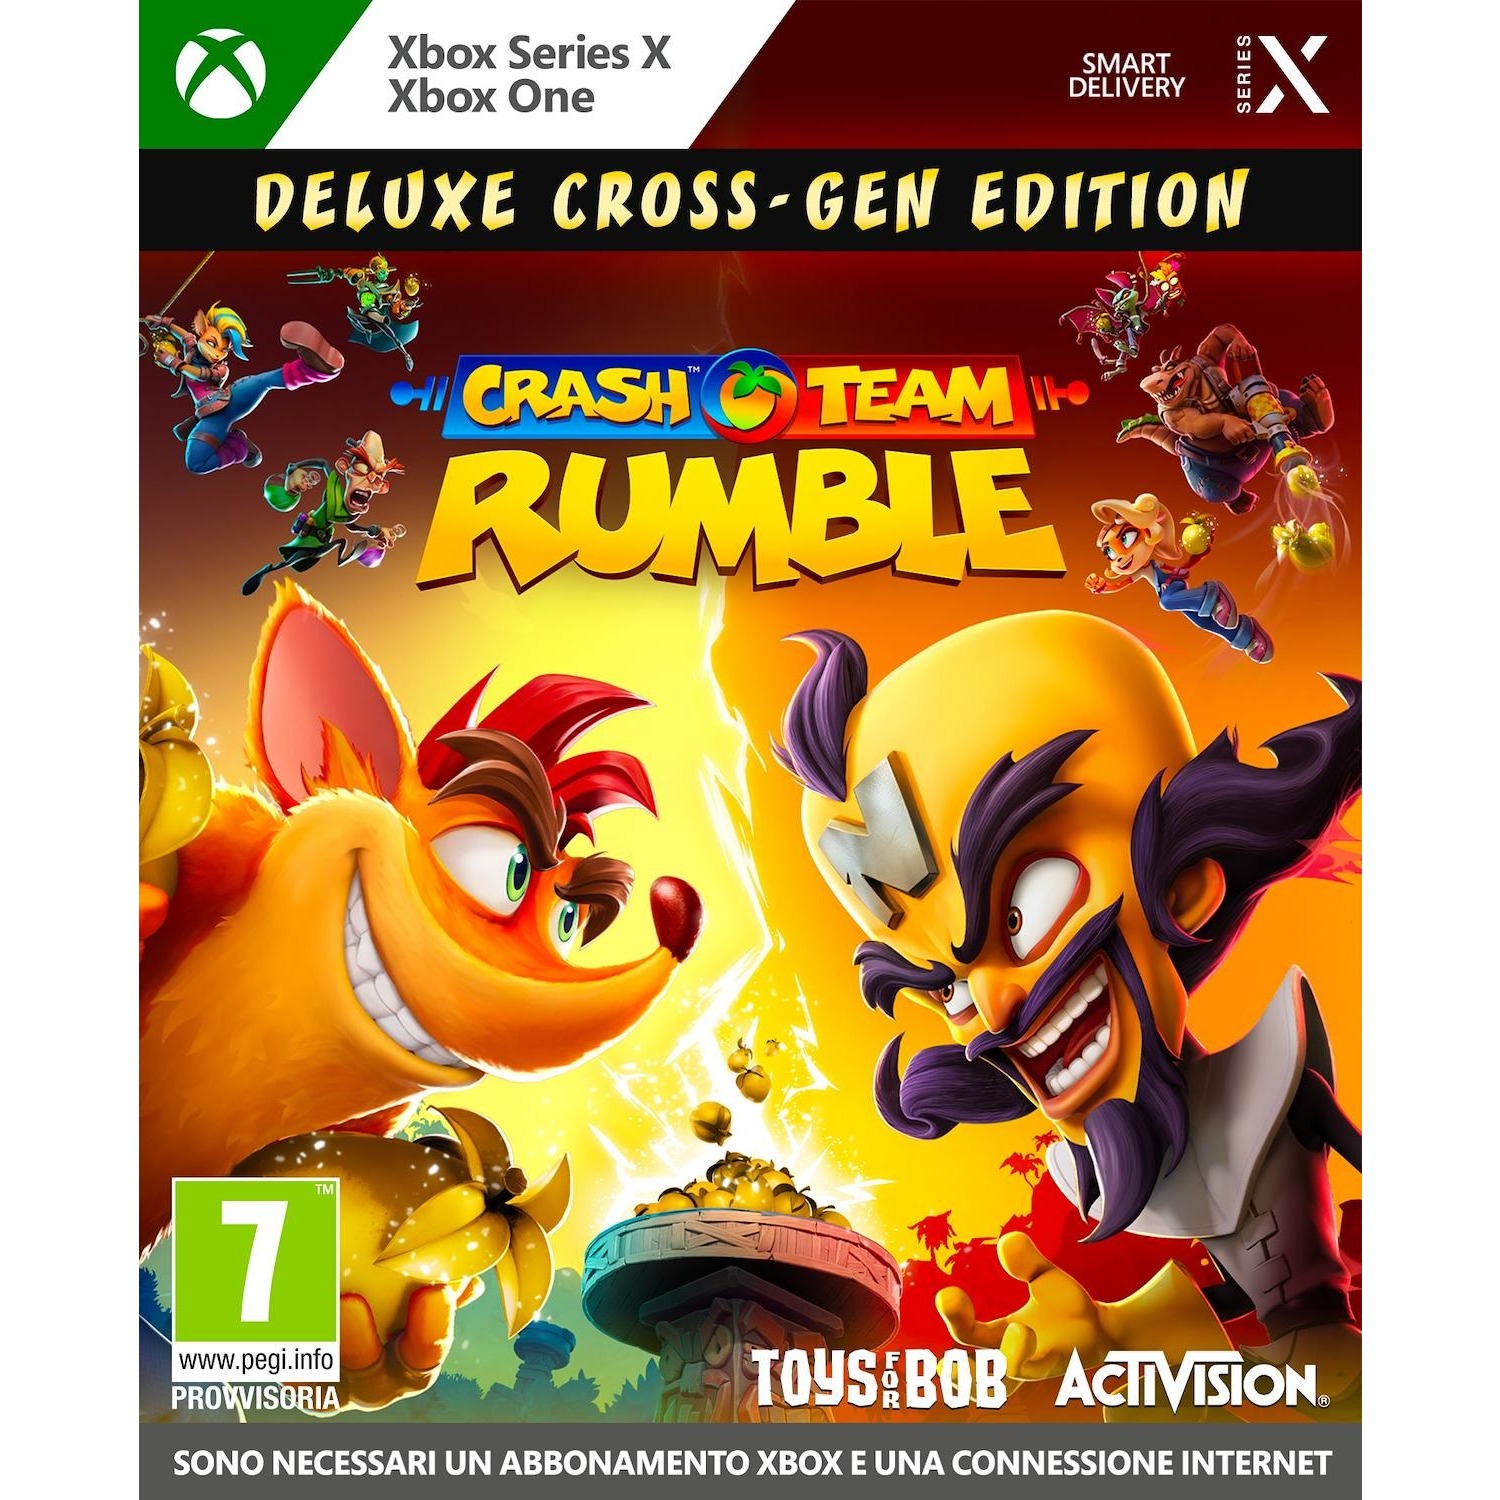 Immagine per Gioco XONE/Series X Crash Team Rumble da DIMOStore